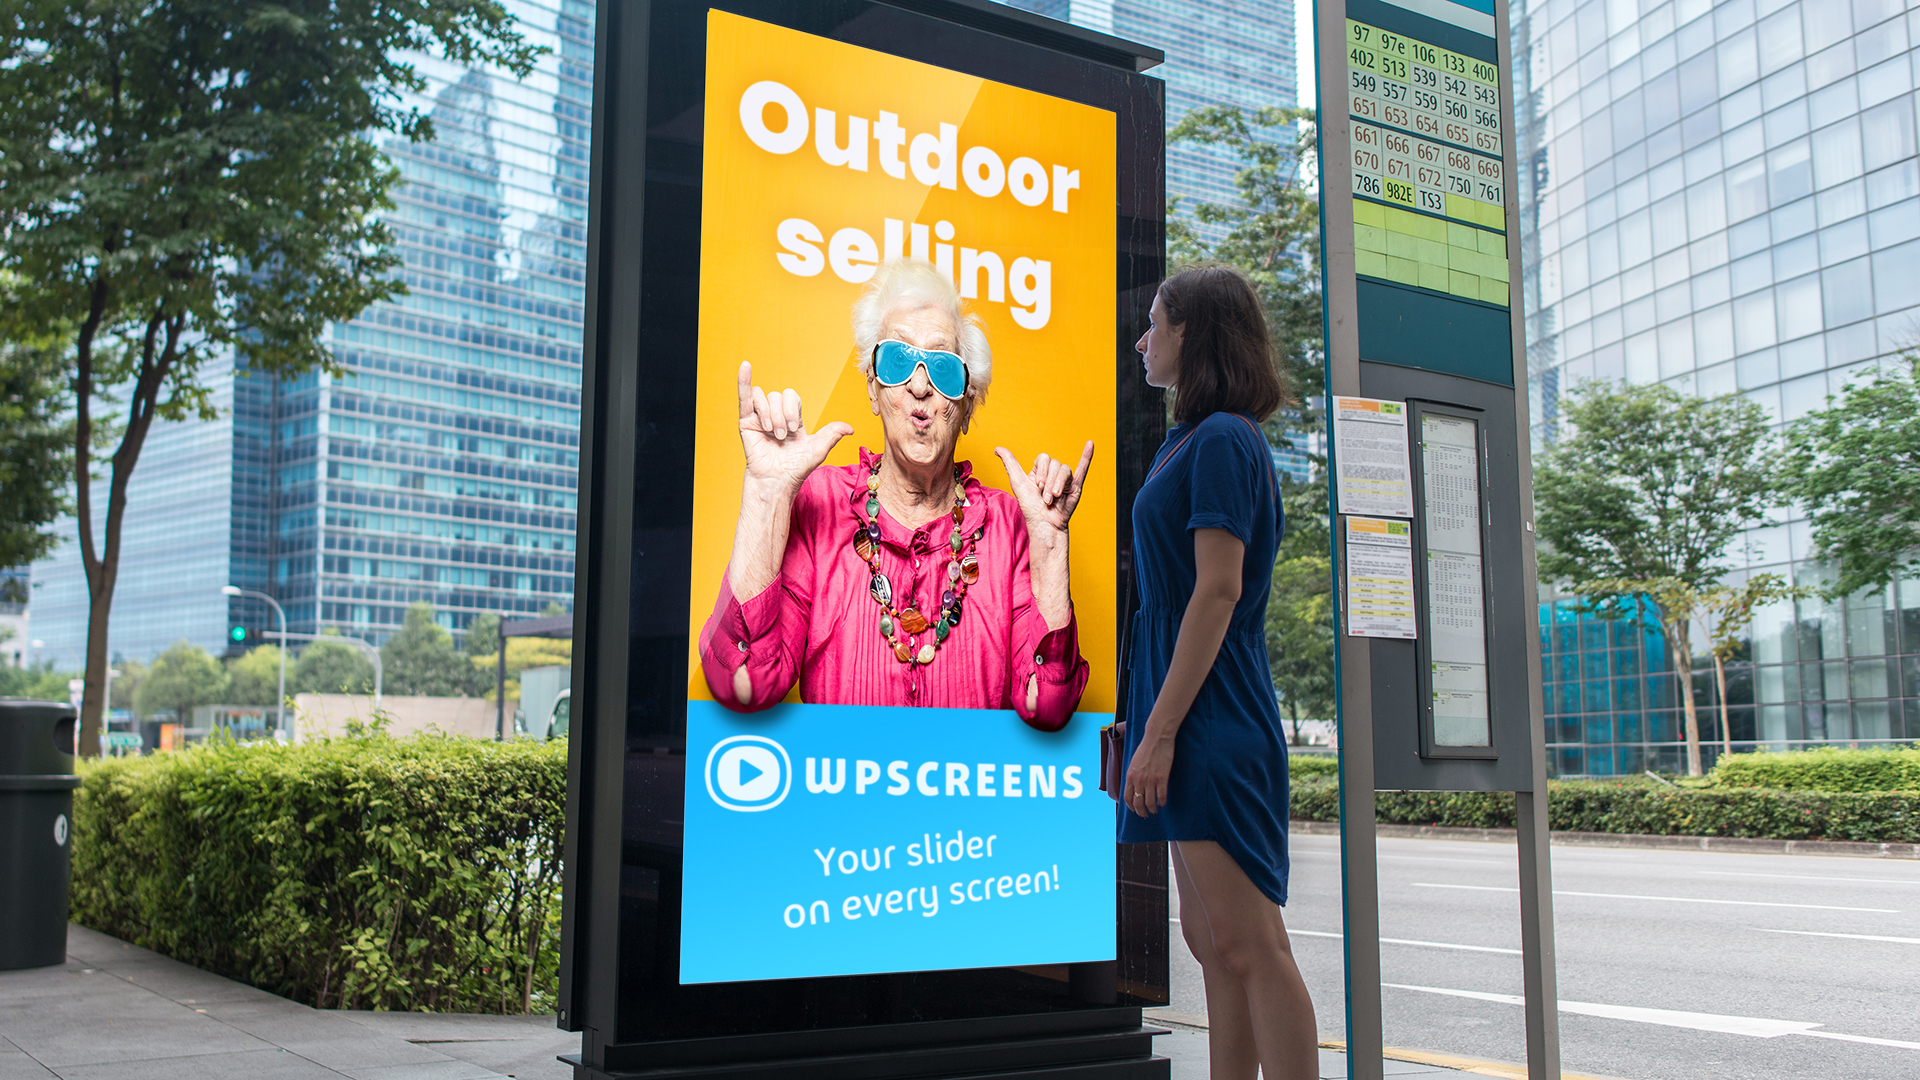 WPScreens Digital Signage for outdoor marketing